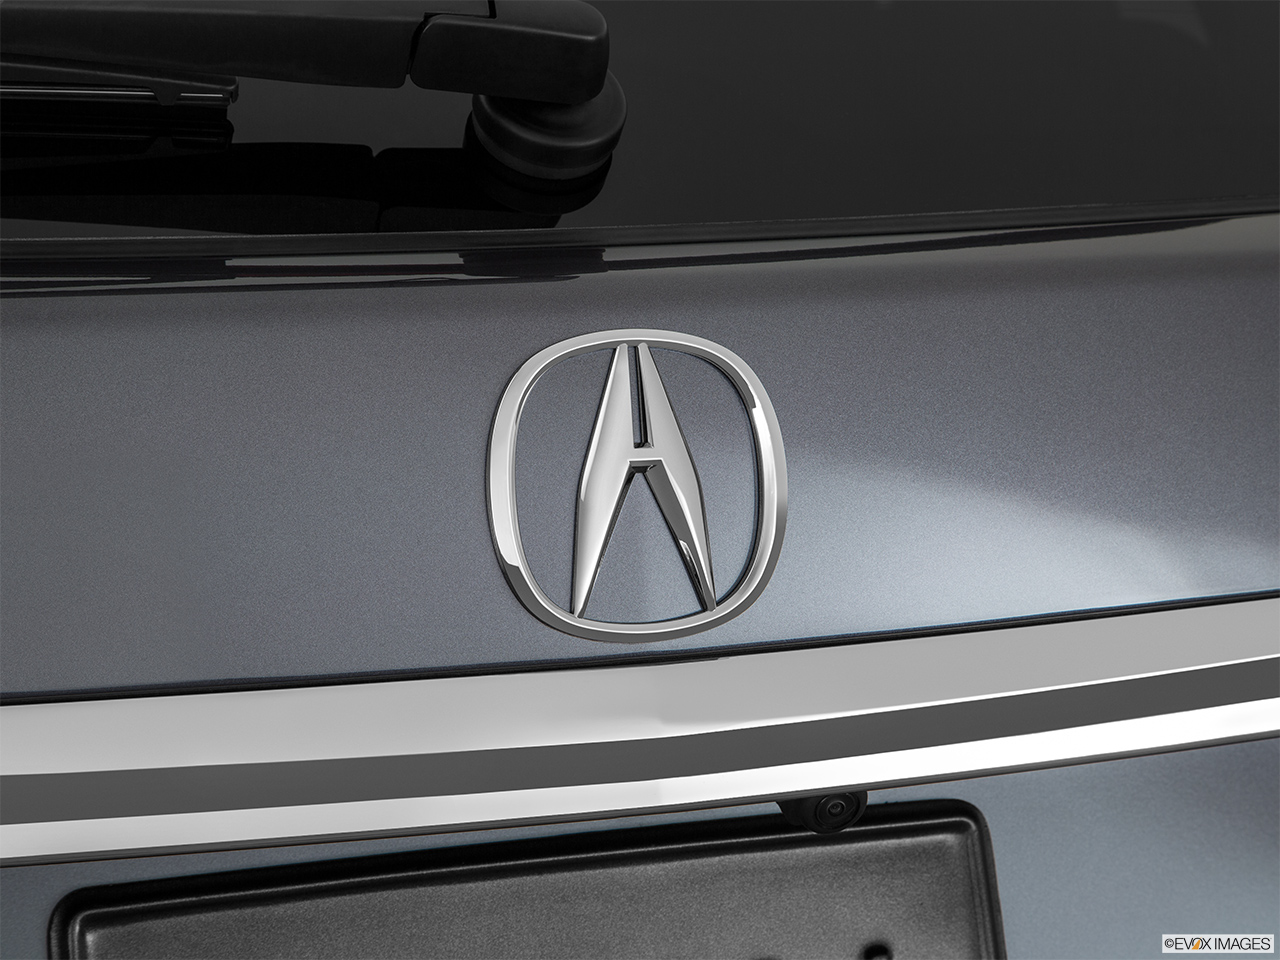 2017 Acura MDX Base Rear manufacture badge/emblem 